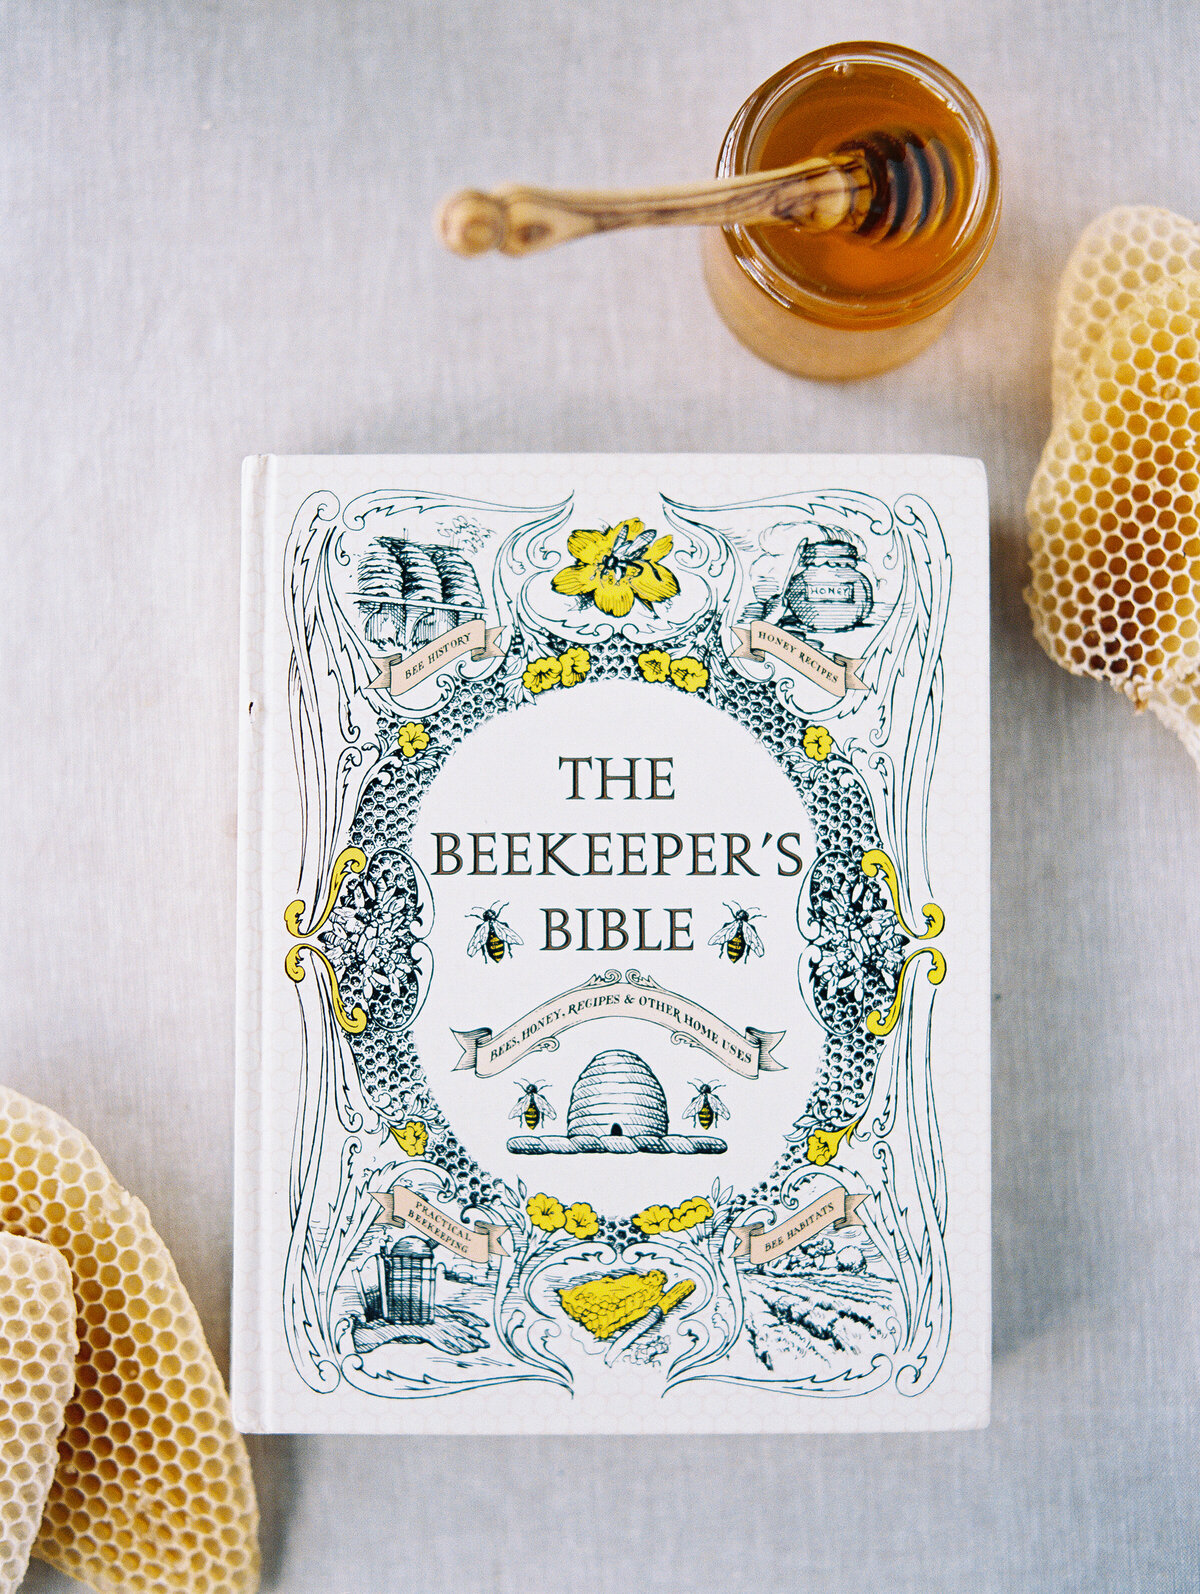 The Beekeeper's Bible for local honey farm in Oahu, Hawaii